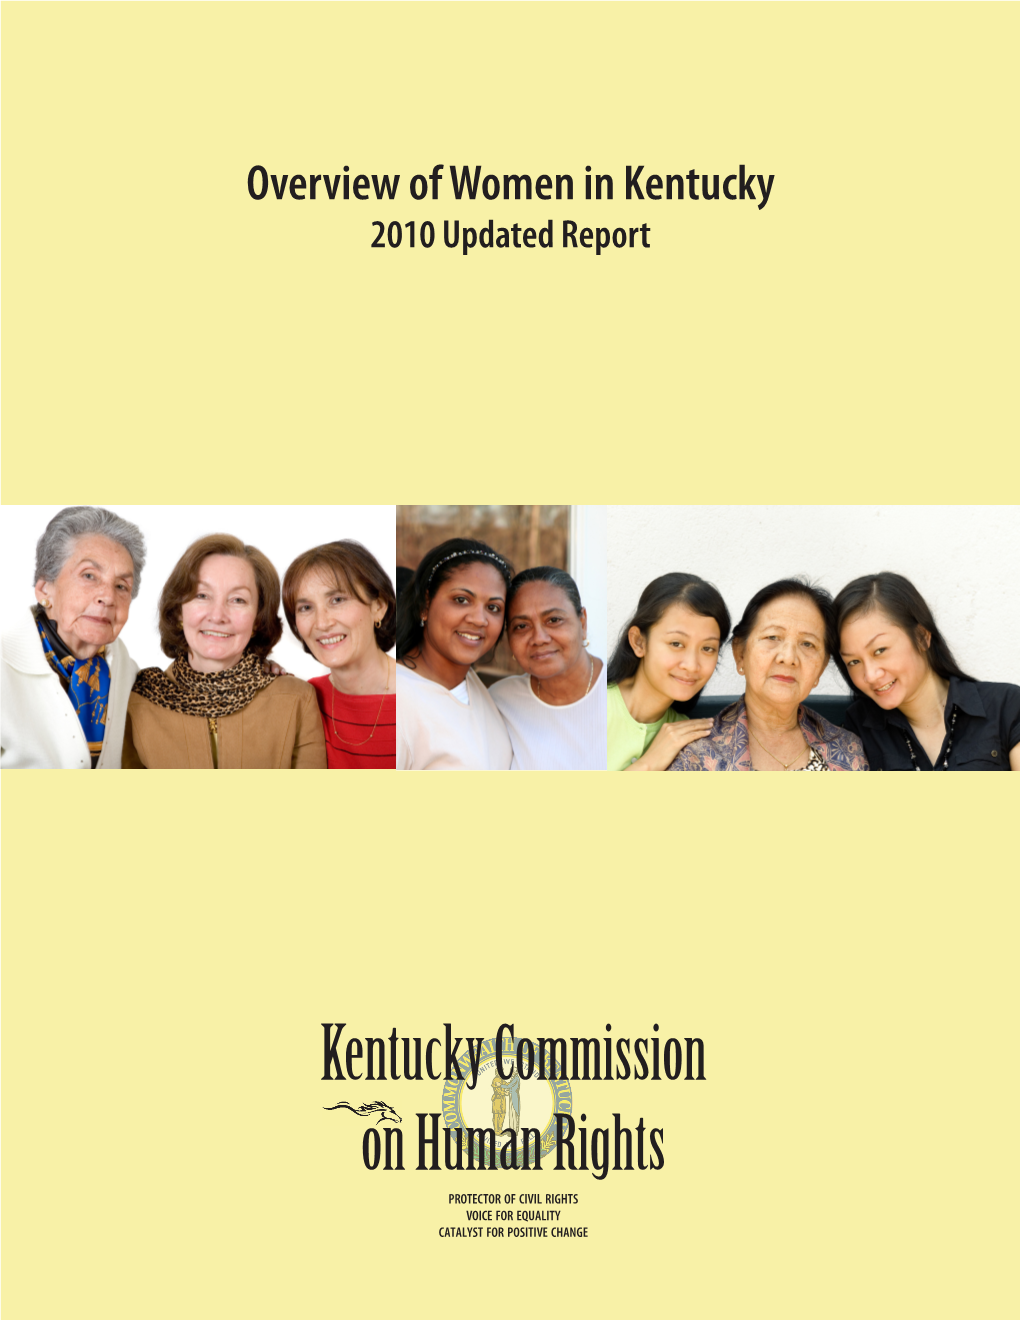 Overview of Women in Kentucky 2010 Updated Report